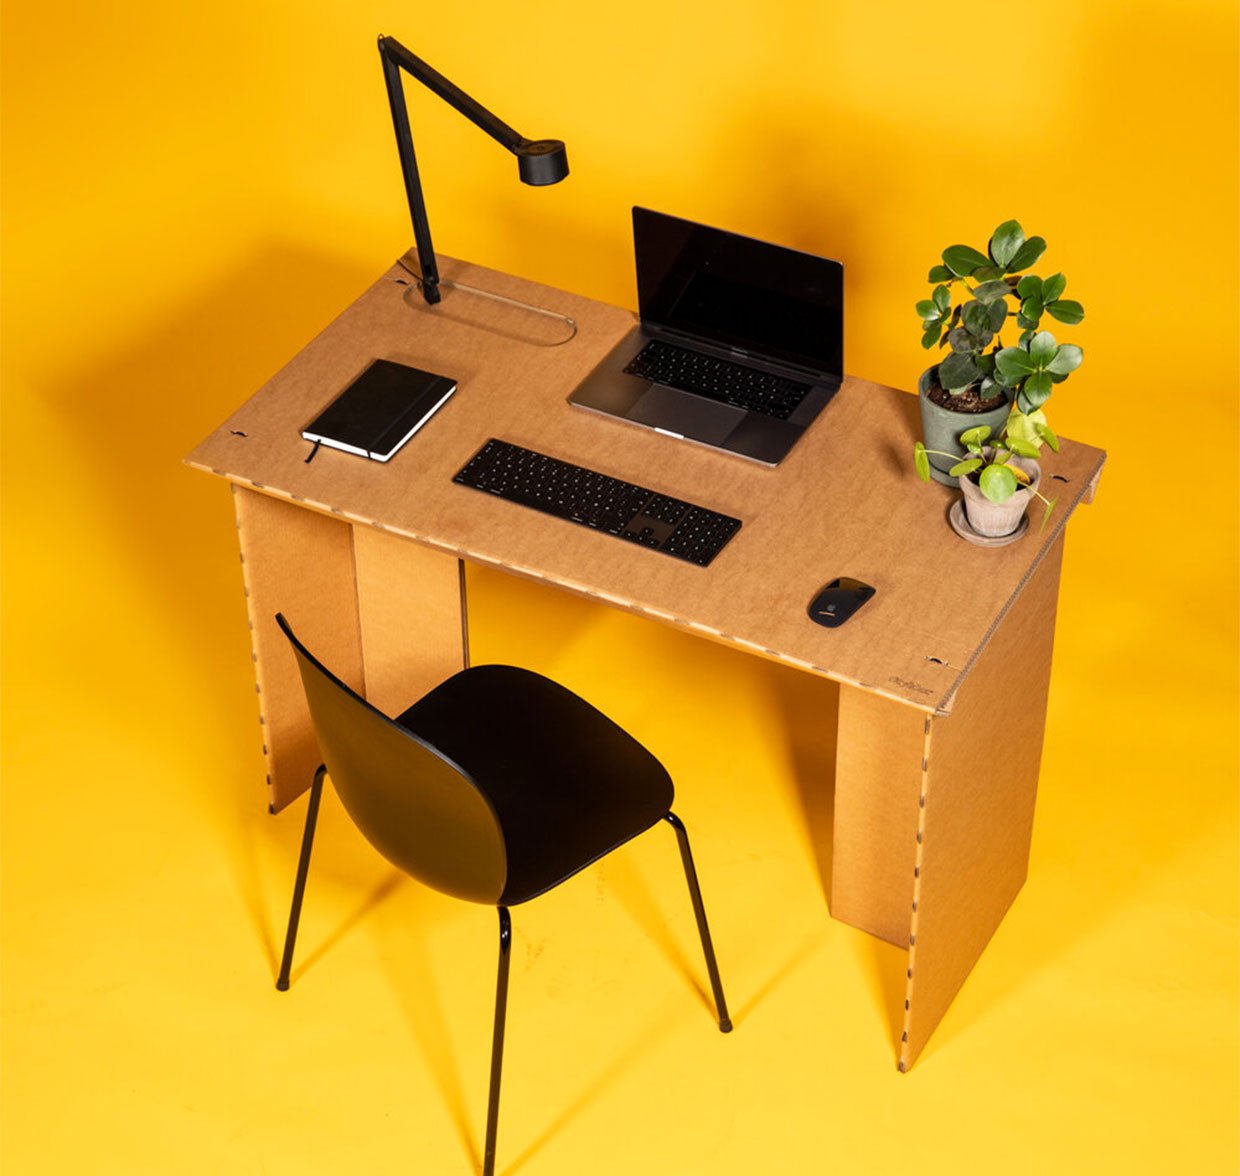 StayTheF***Home Cardboard Desk